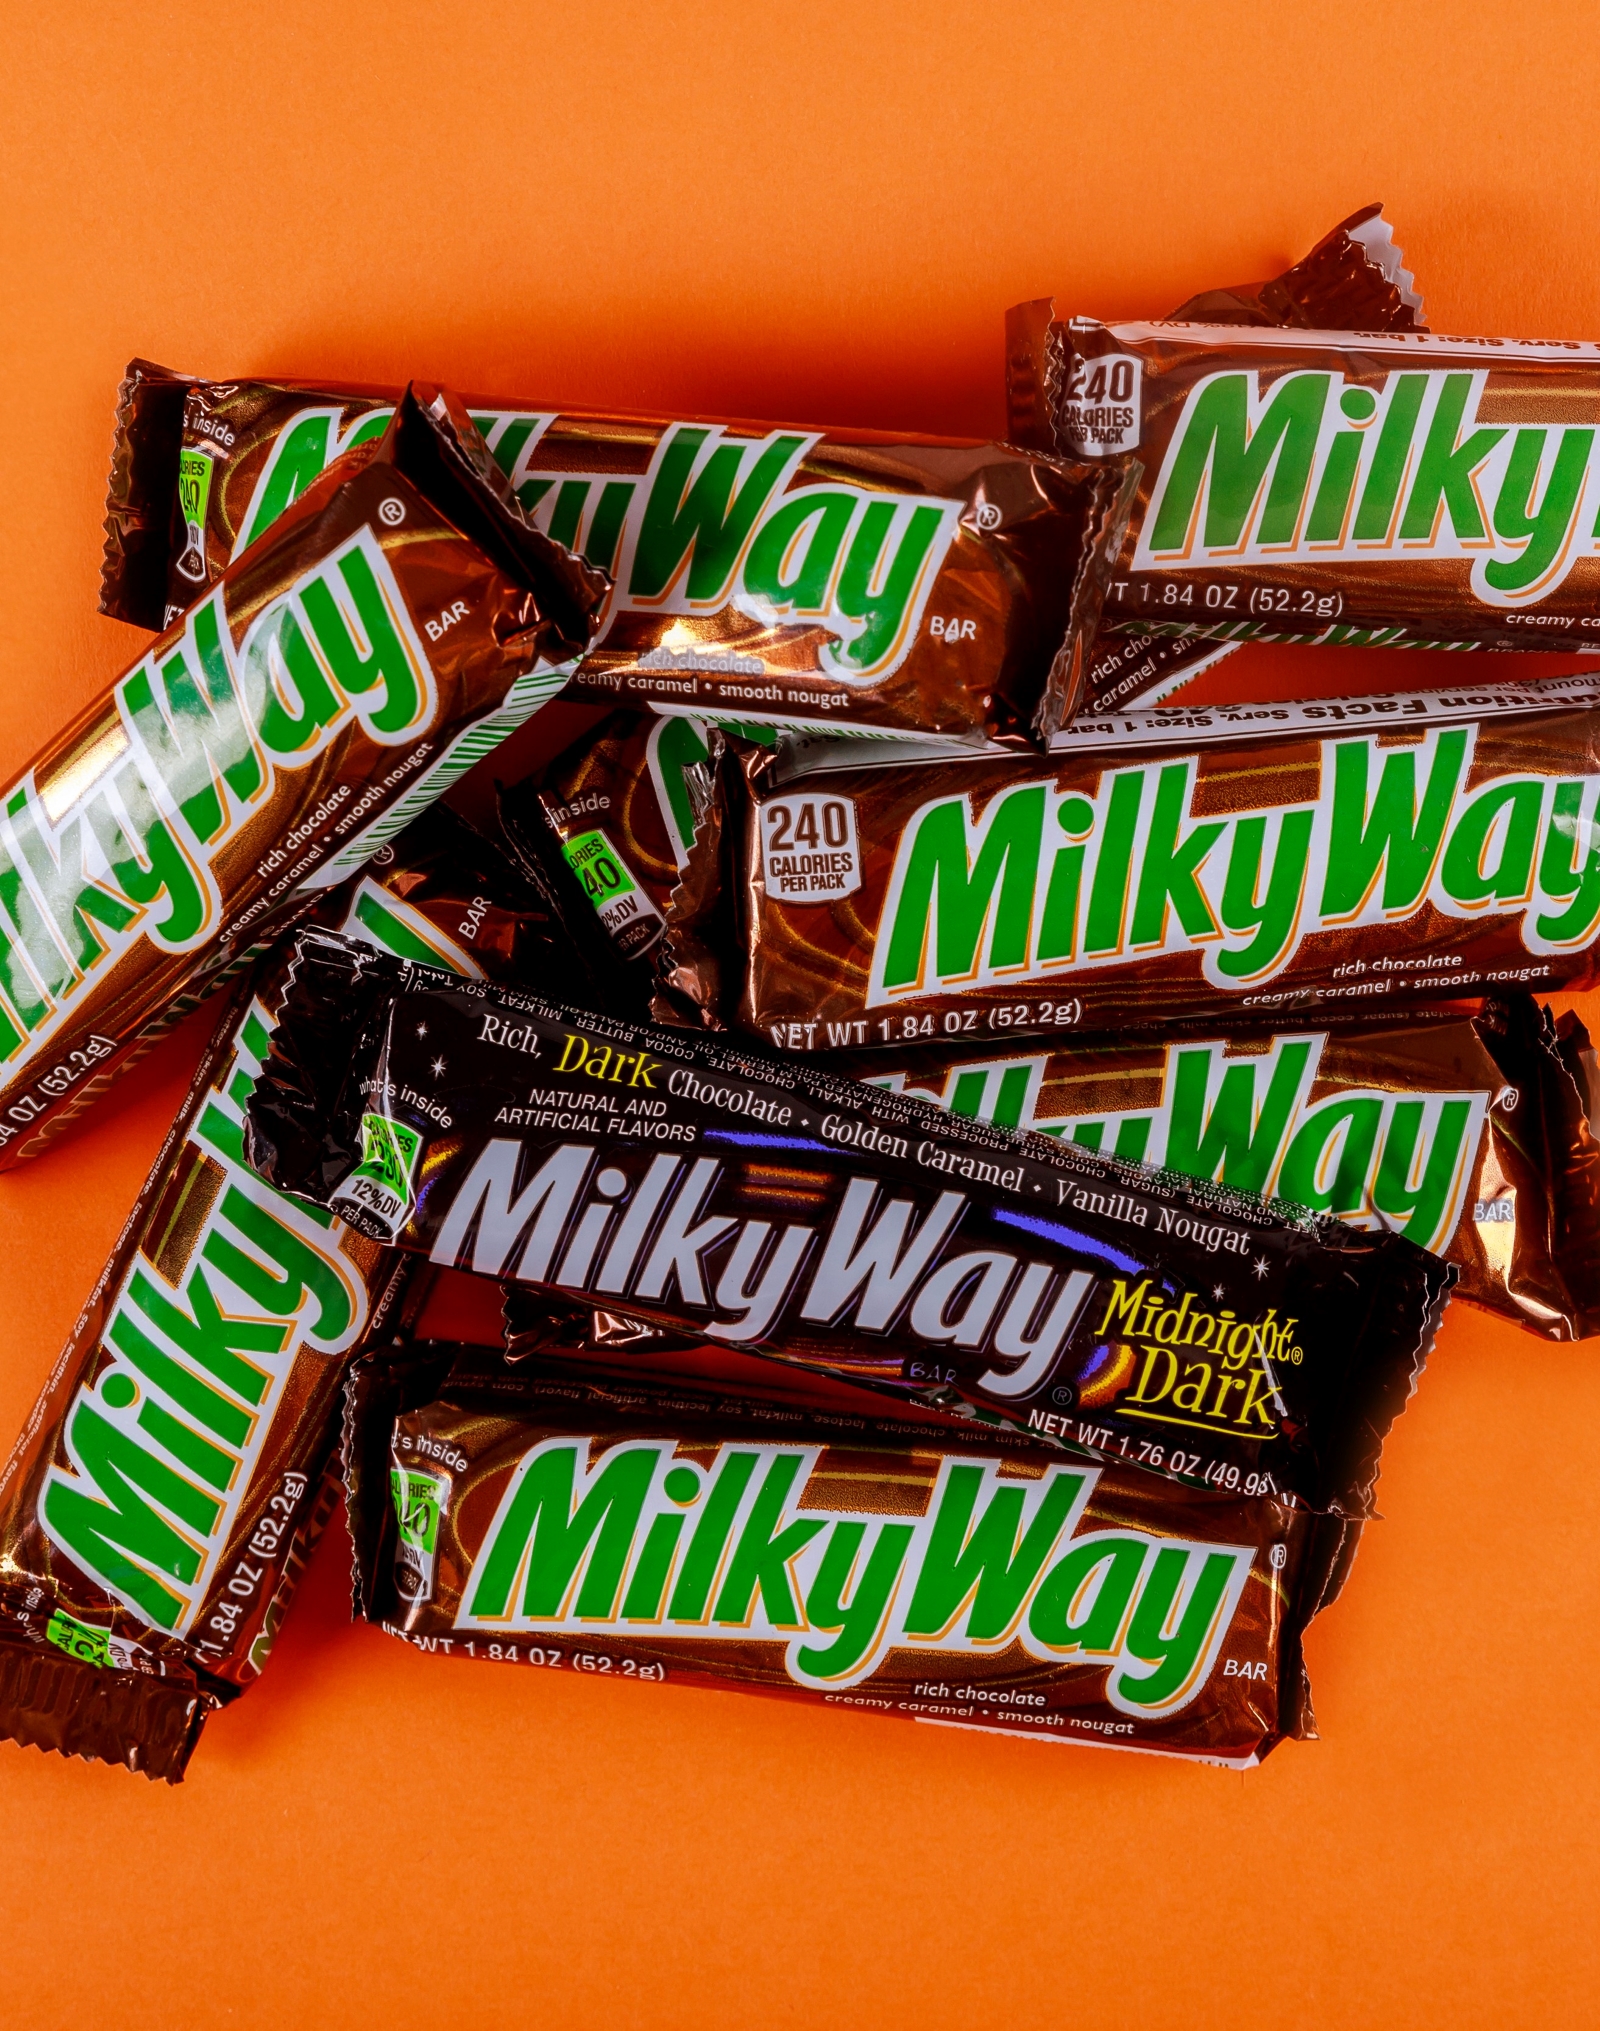 Is Milky Way Gluten Free?